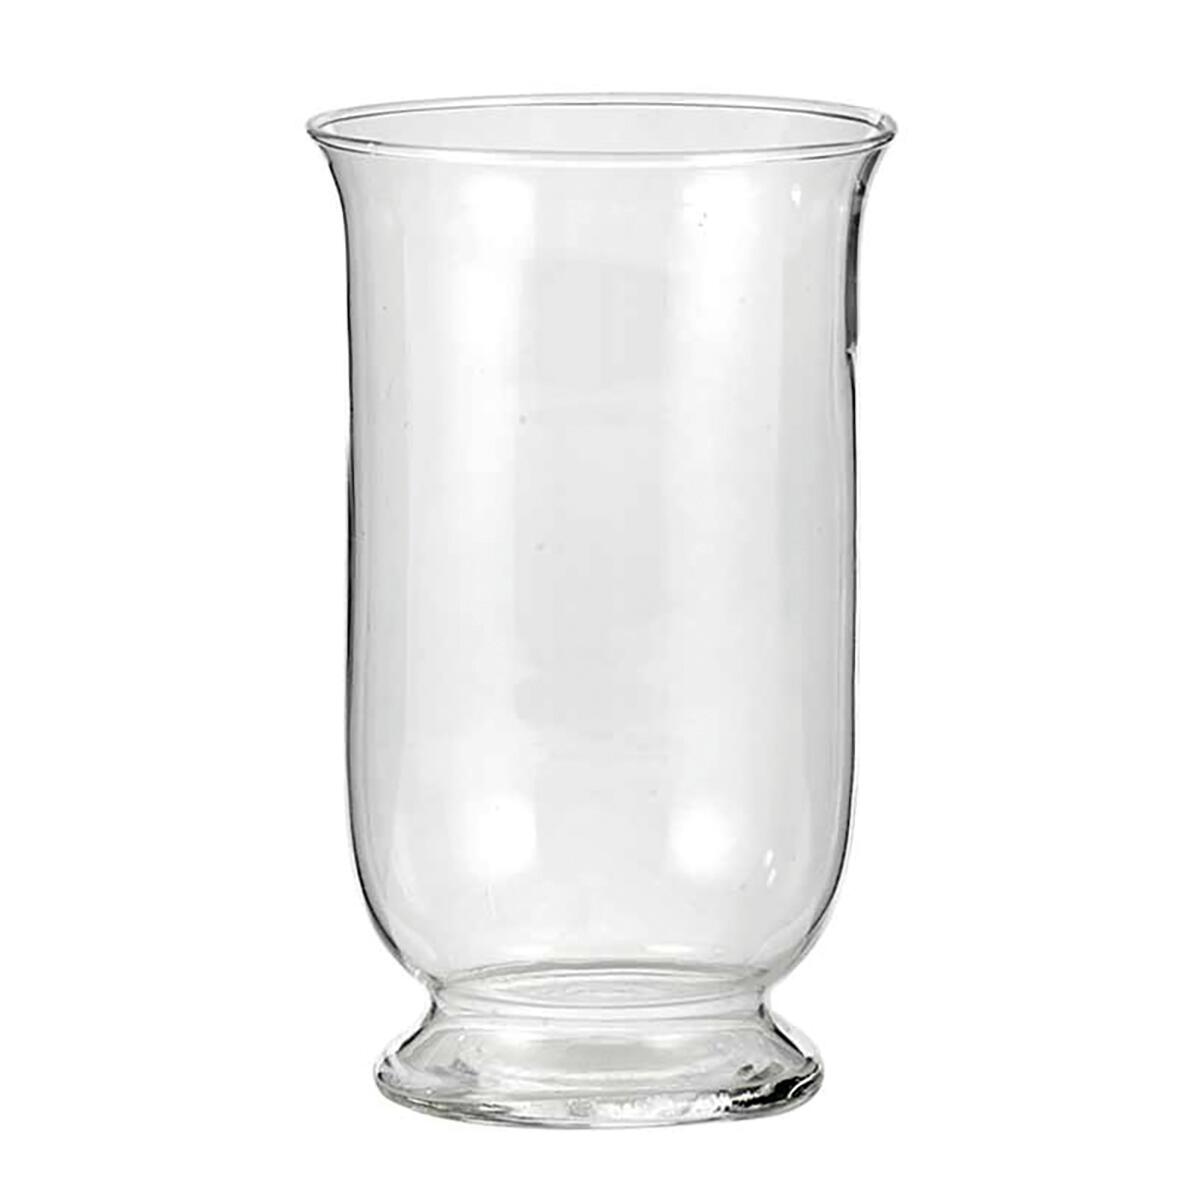 Kurtzy Vaso Vetro Trasparente - 29 cm - Vasi Moderni da Interno